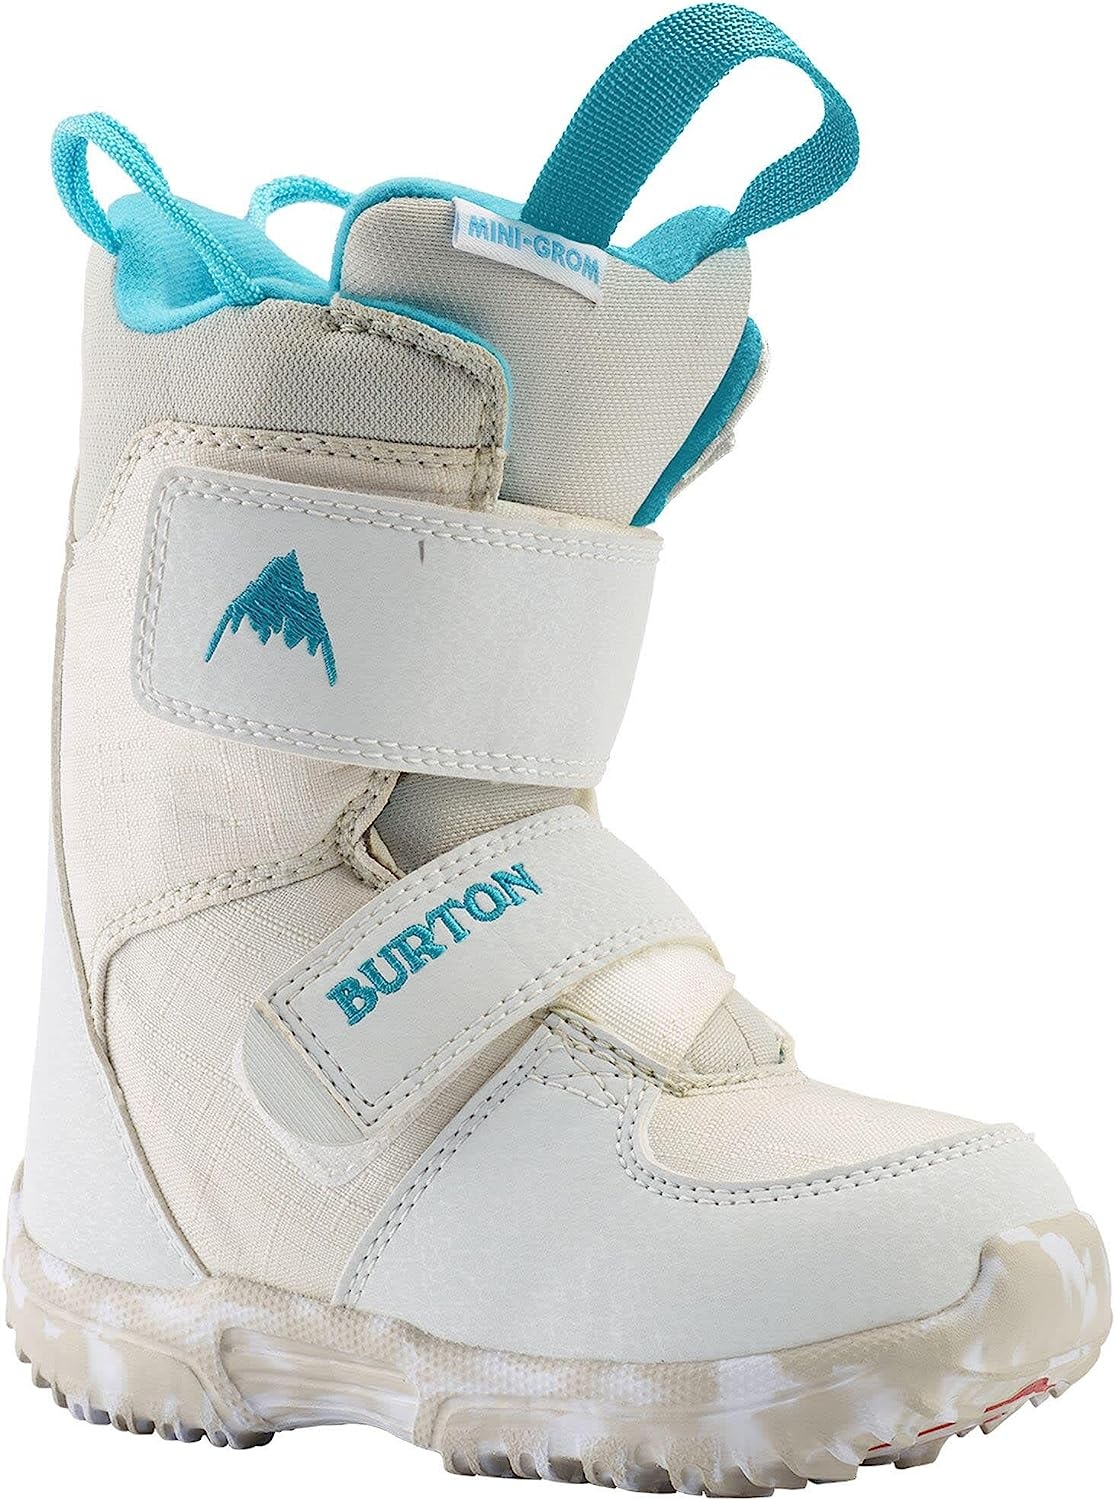 BURTON Burton Toddlers' Mini Grom Snowboard Boots 24